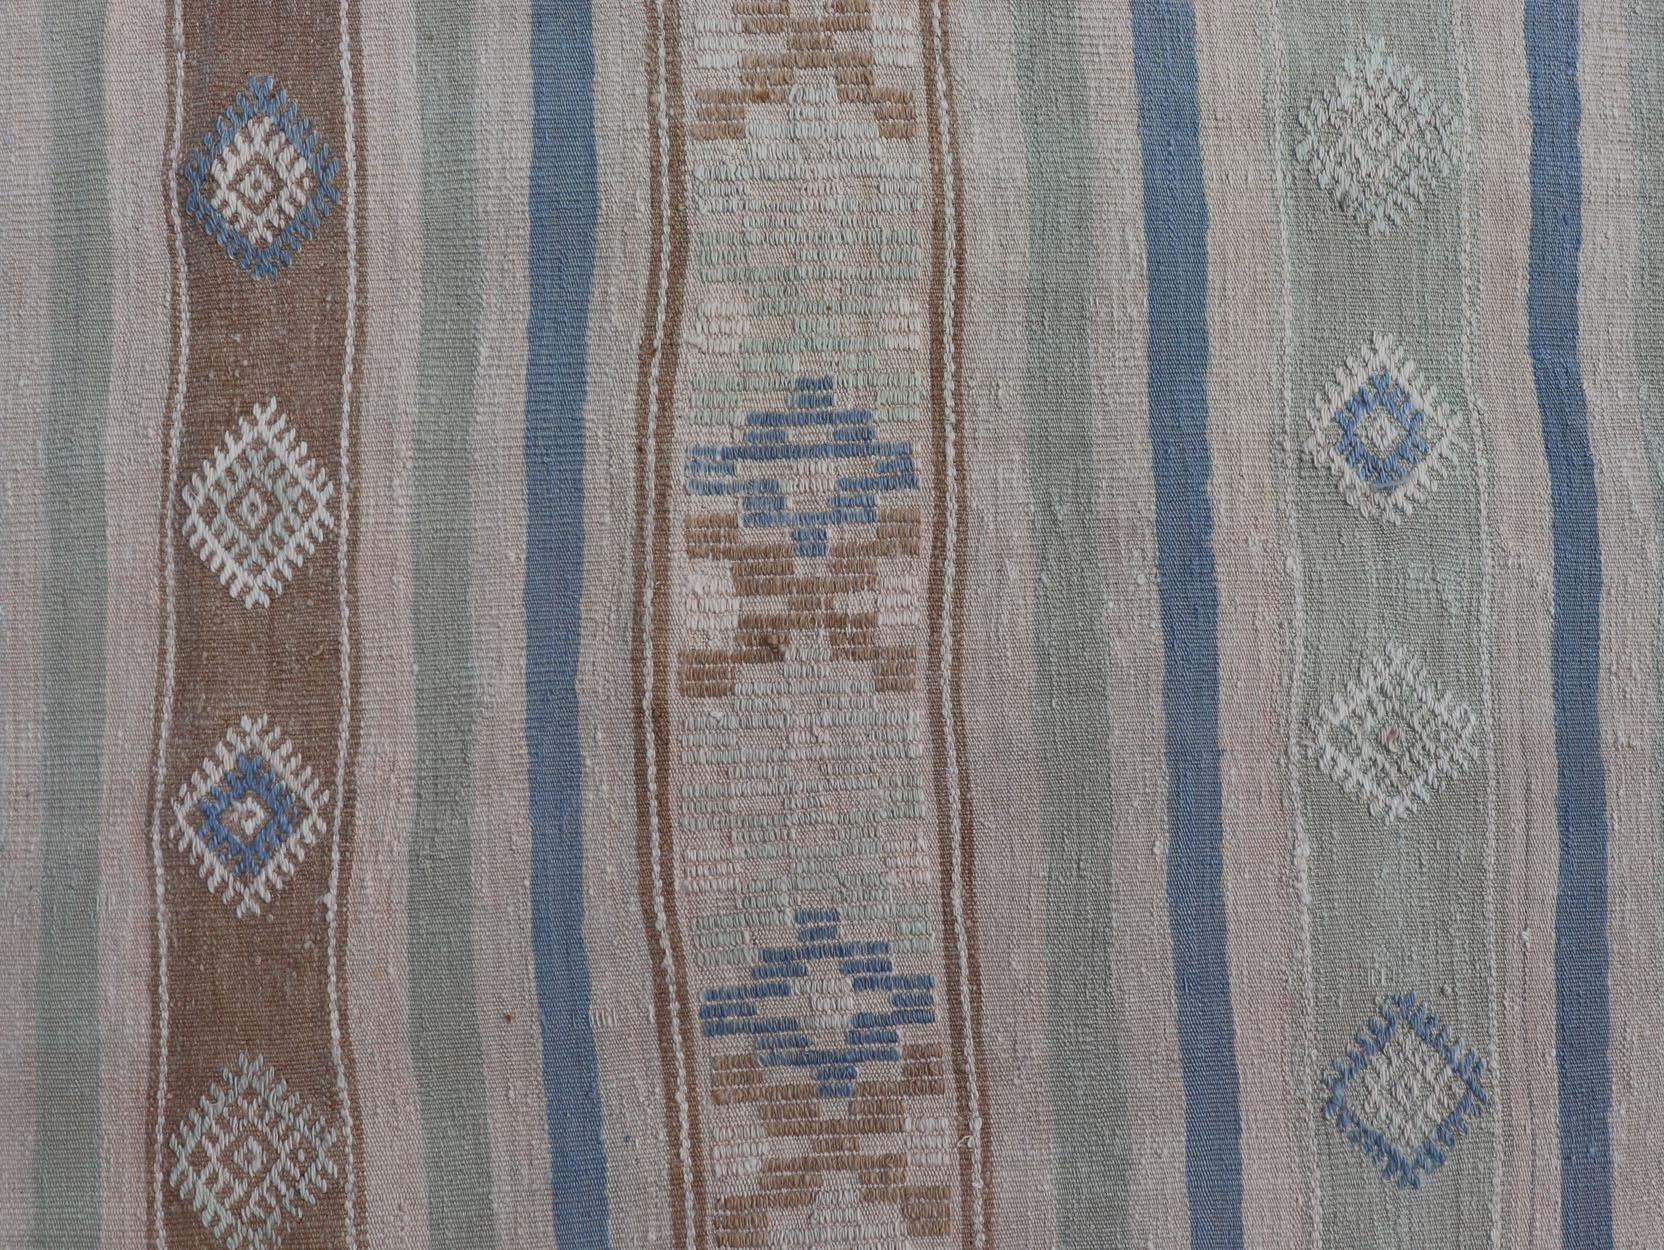 Geometric stripe design vintage Kilim from Turkey, Keivan Woven Arts / rug EN-176741, country of origin / type: Turkey / Kilim, circa 1950

Measures: 5'10 x 10'7.
 